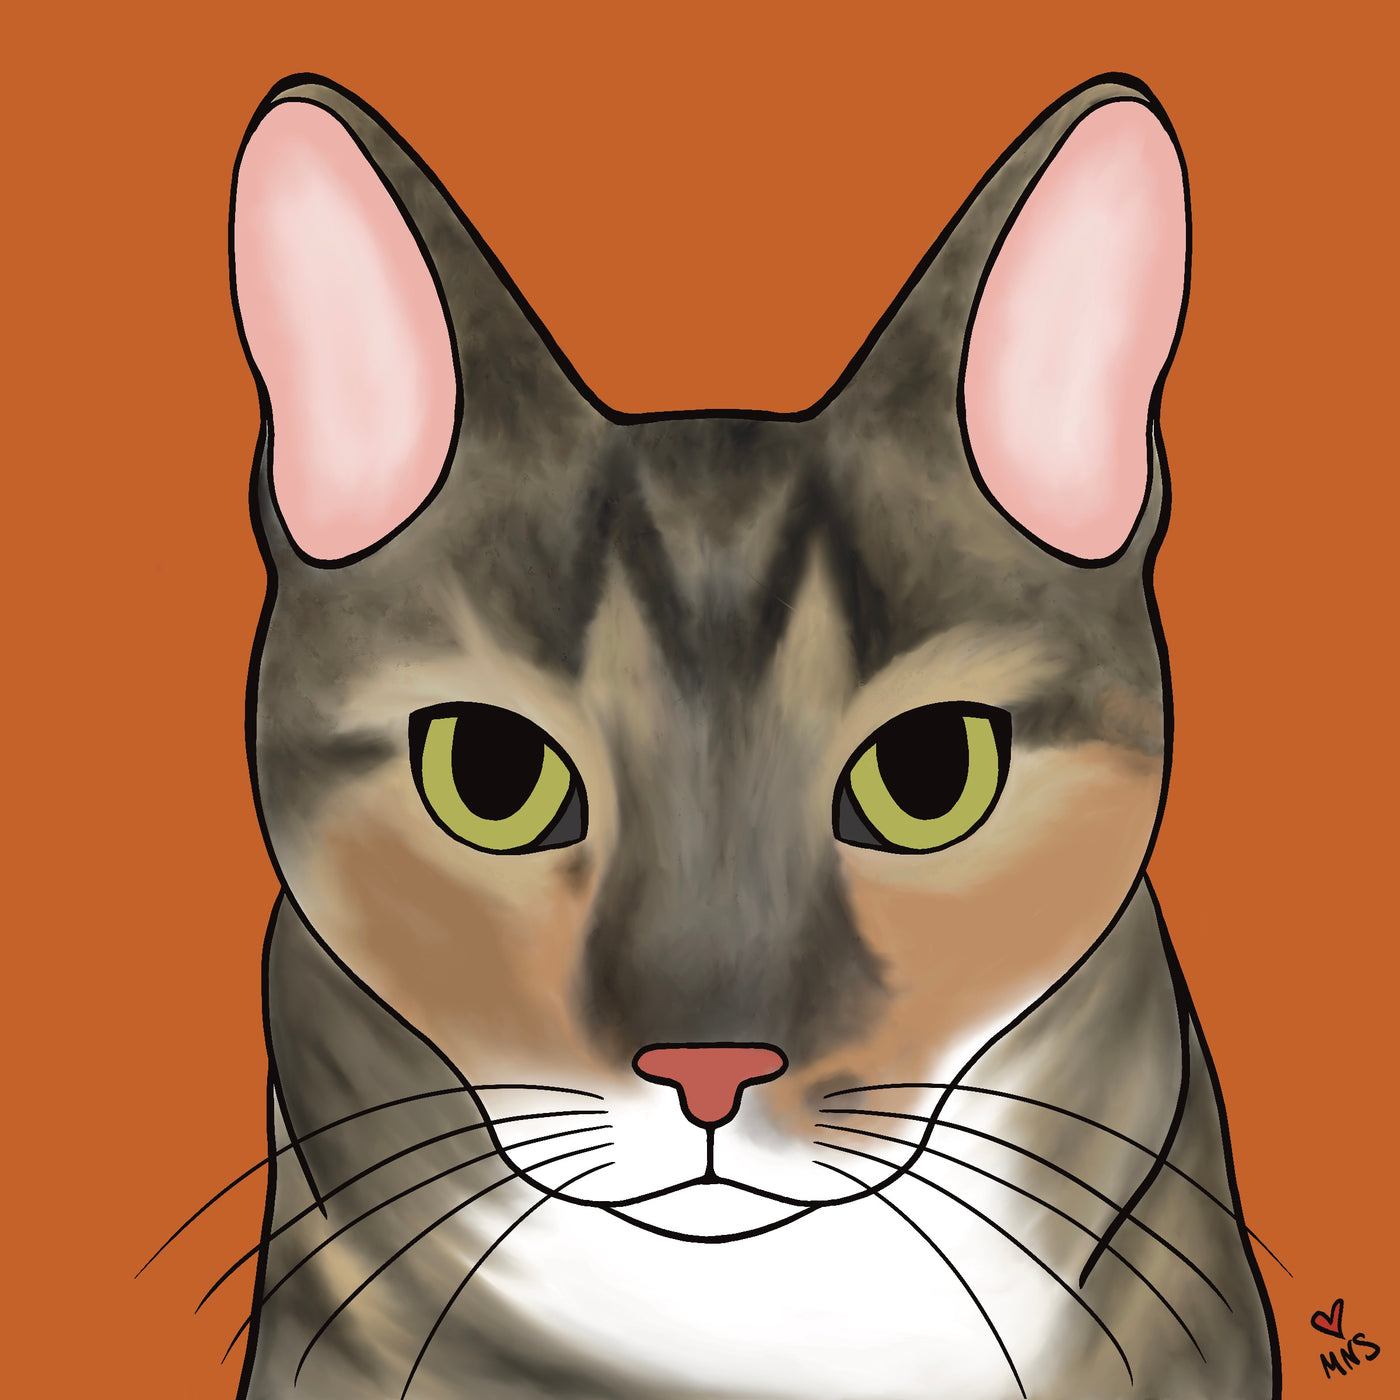 Original Custom Pet Portrait - Digital Art Only or Printed on Canvas